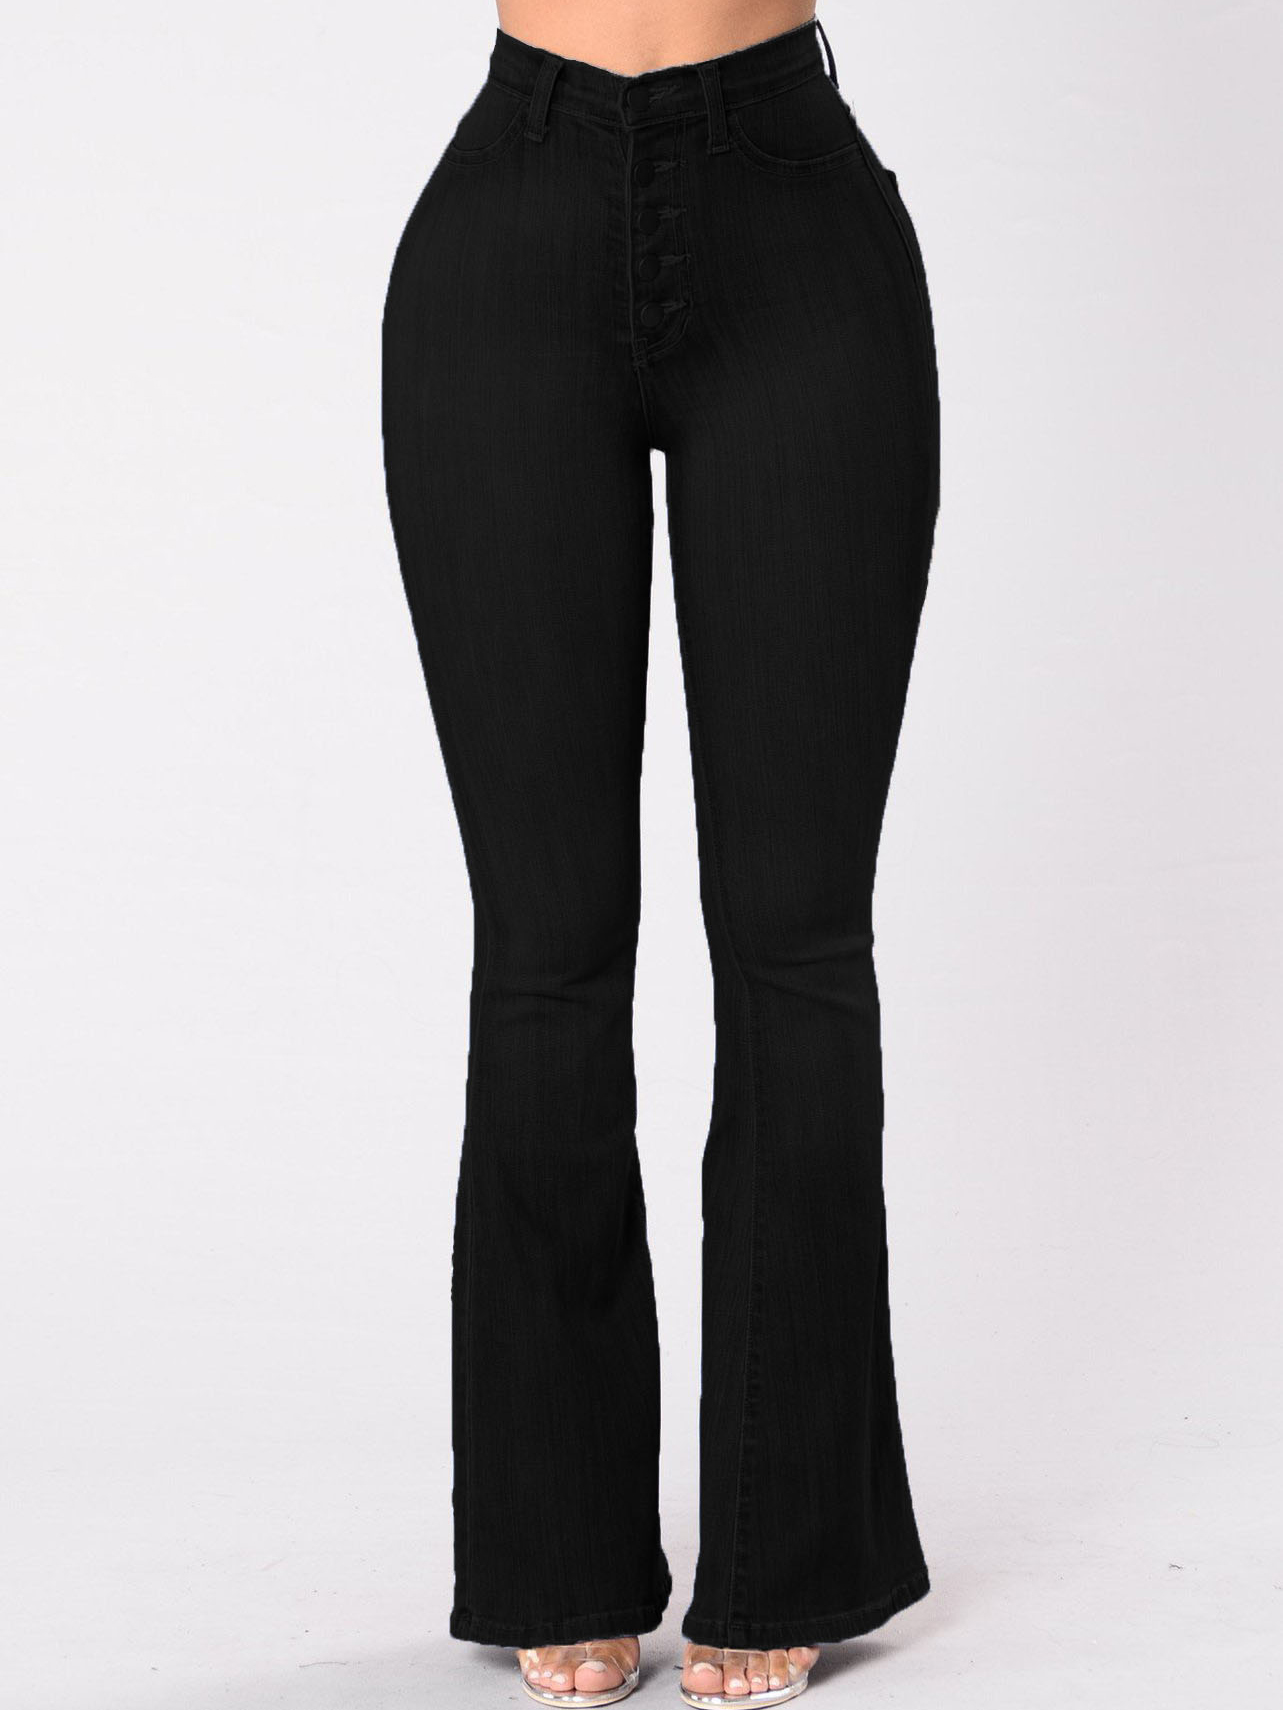 Gorgeous Trendy High Waist Black Flare Jeans